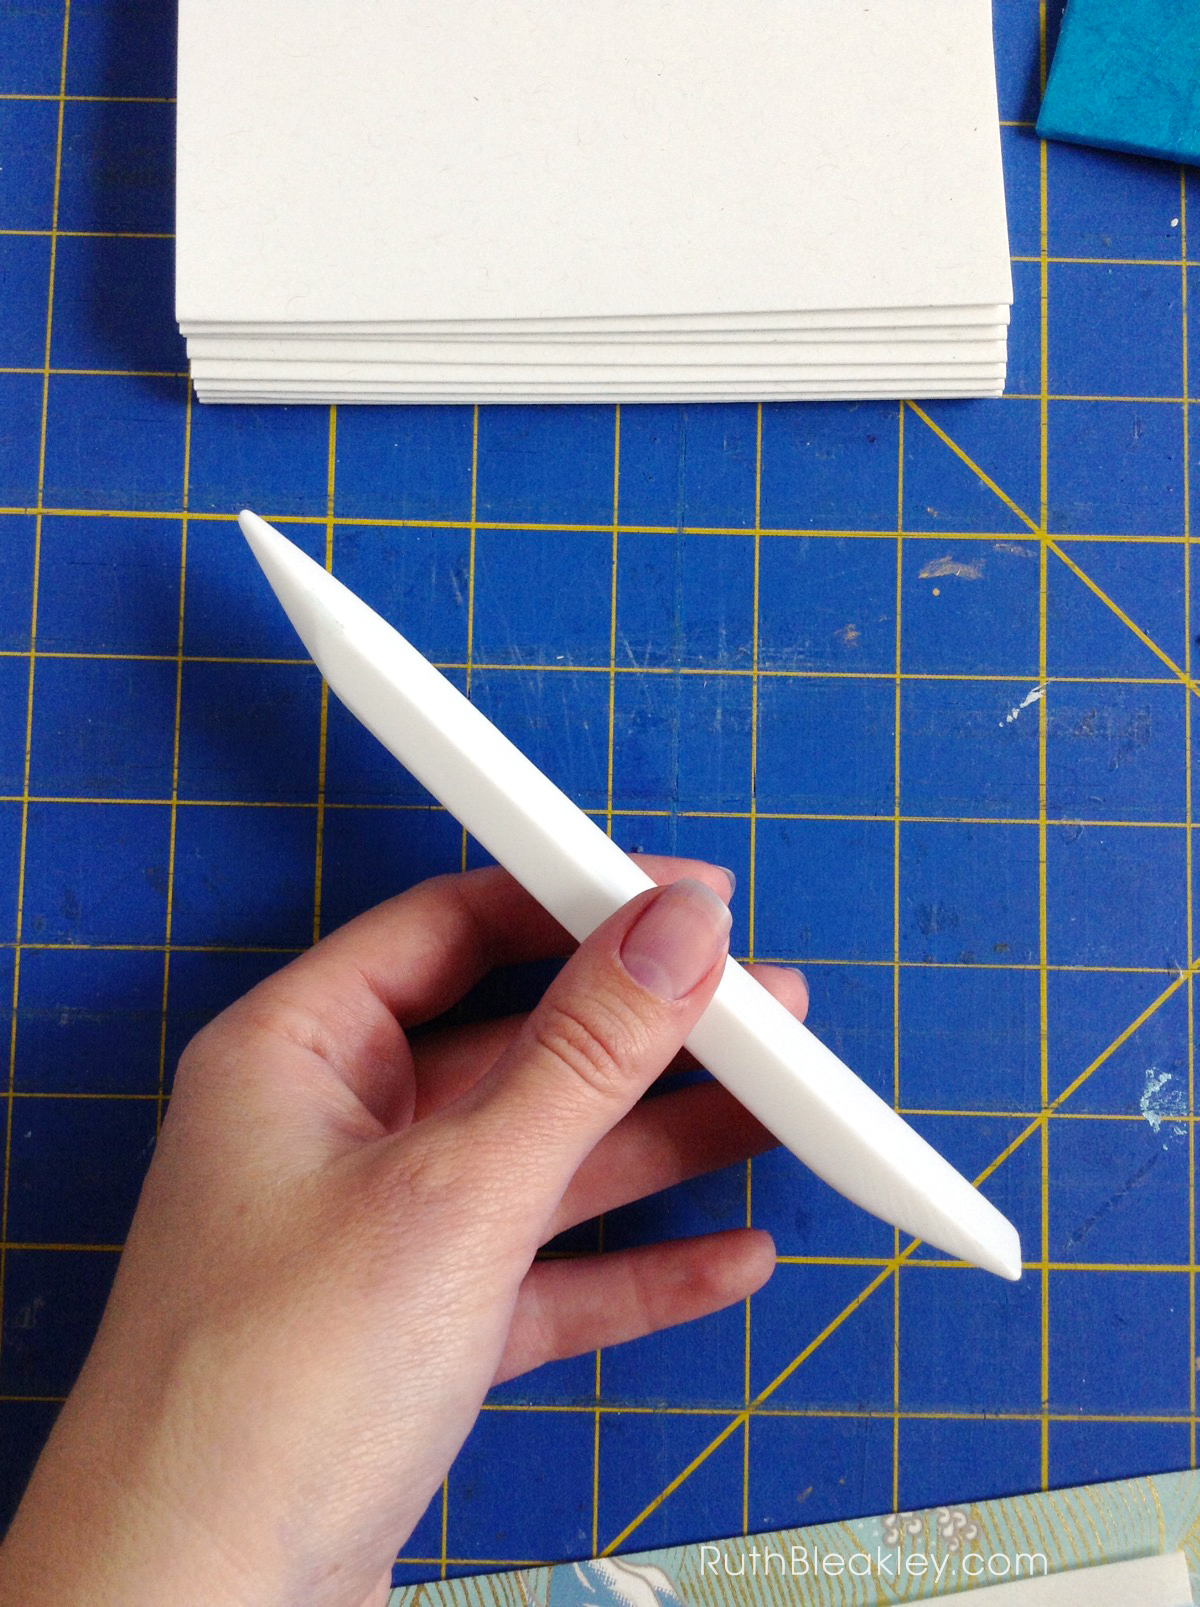 Teflon Bone Folders the essential bookbinding tool - large folder